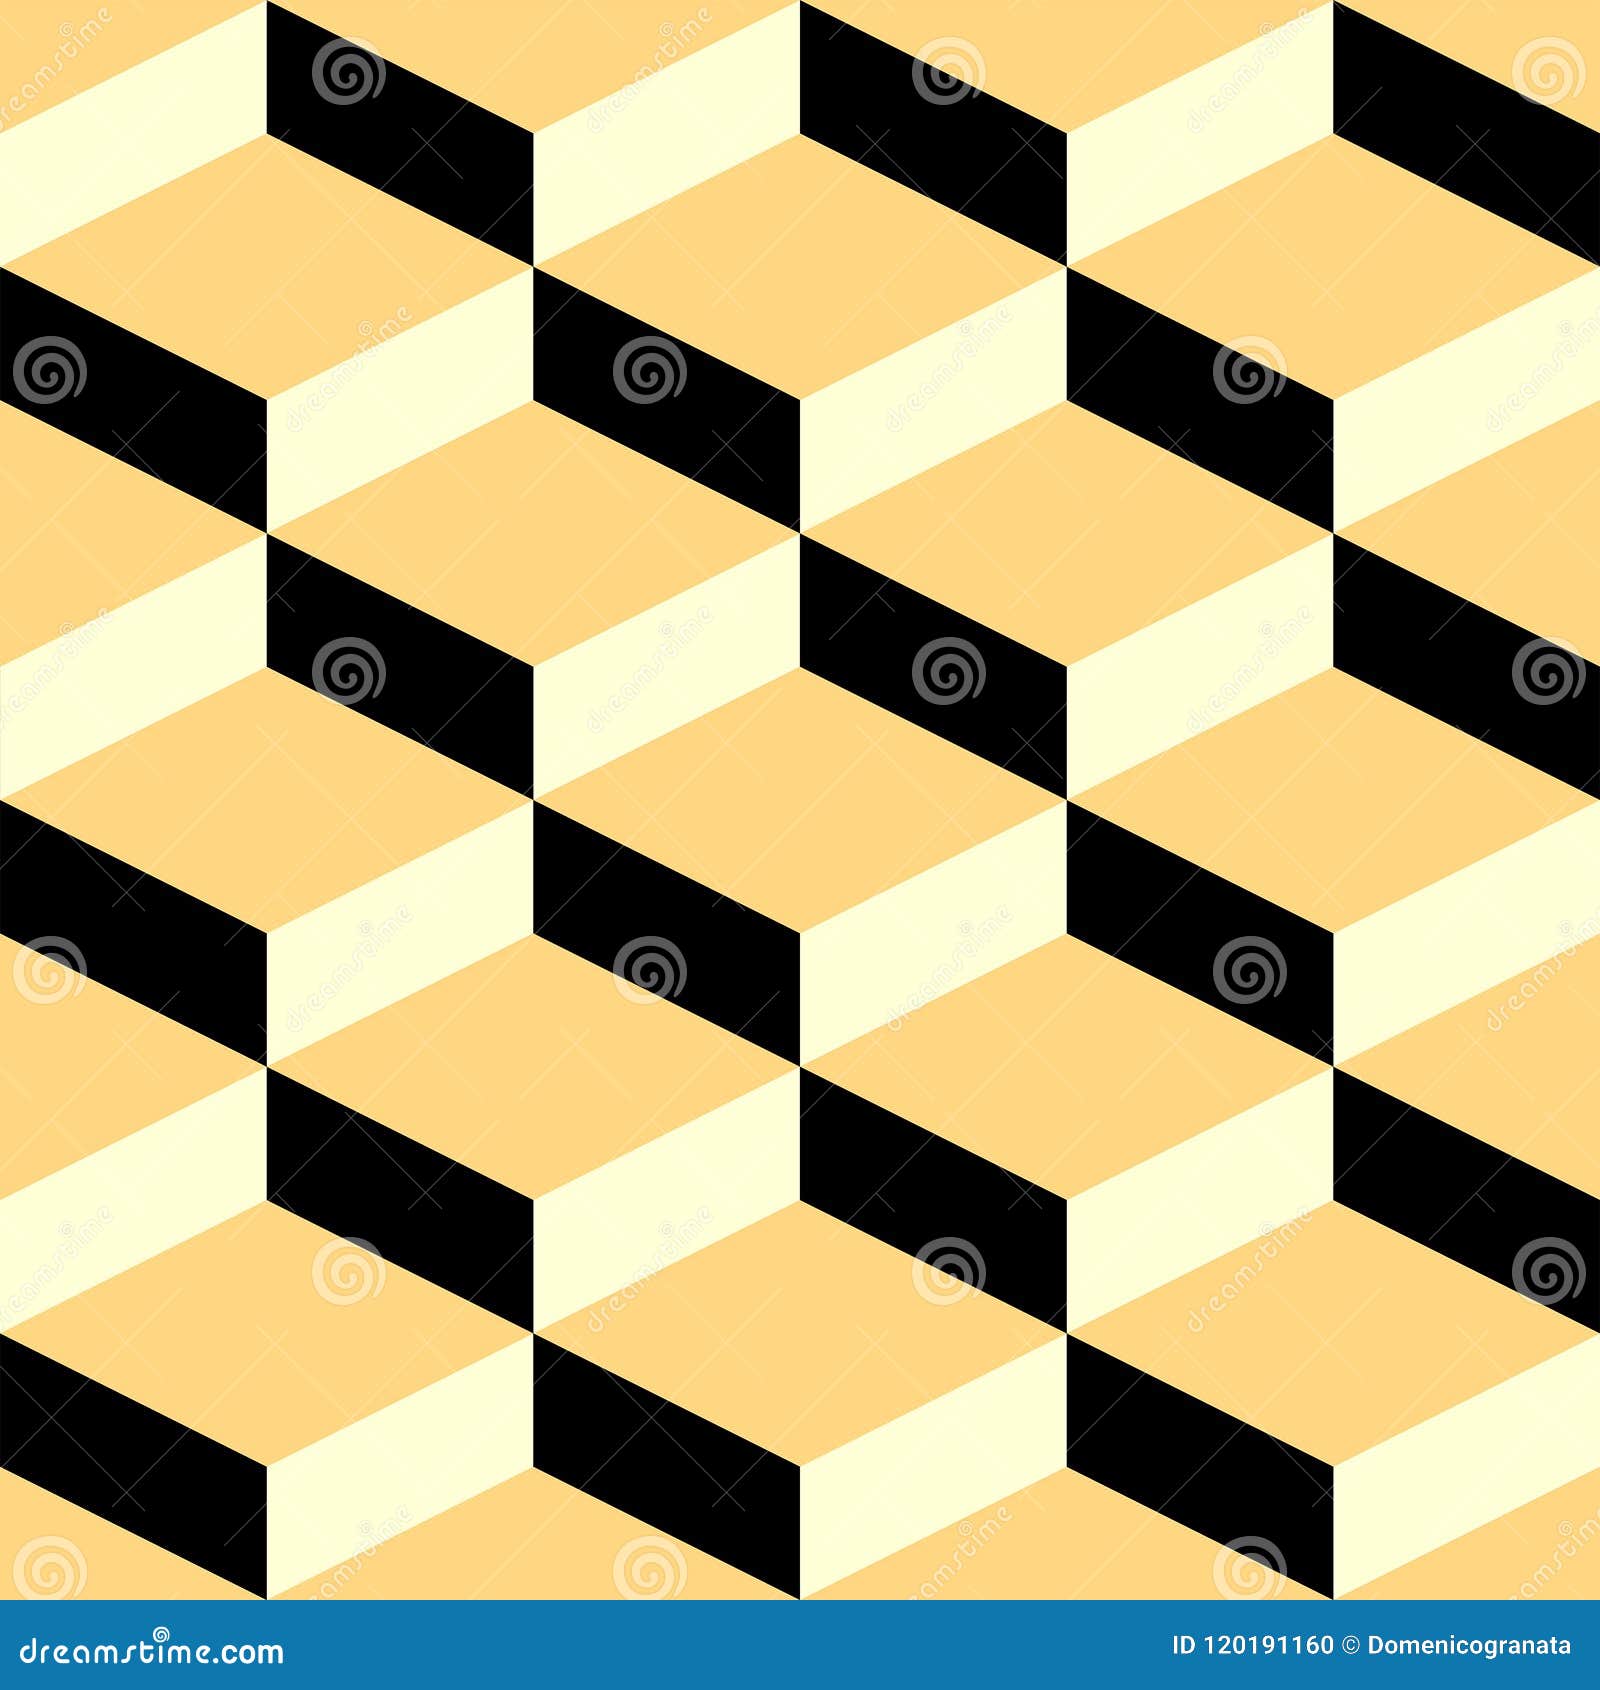 geometric pattern black cream and orange